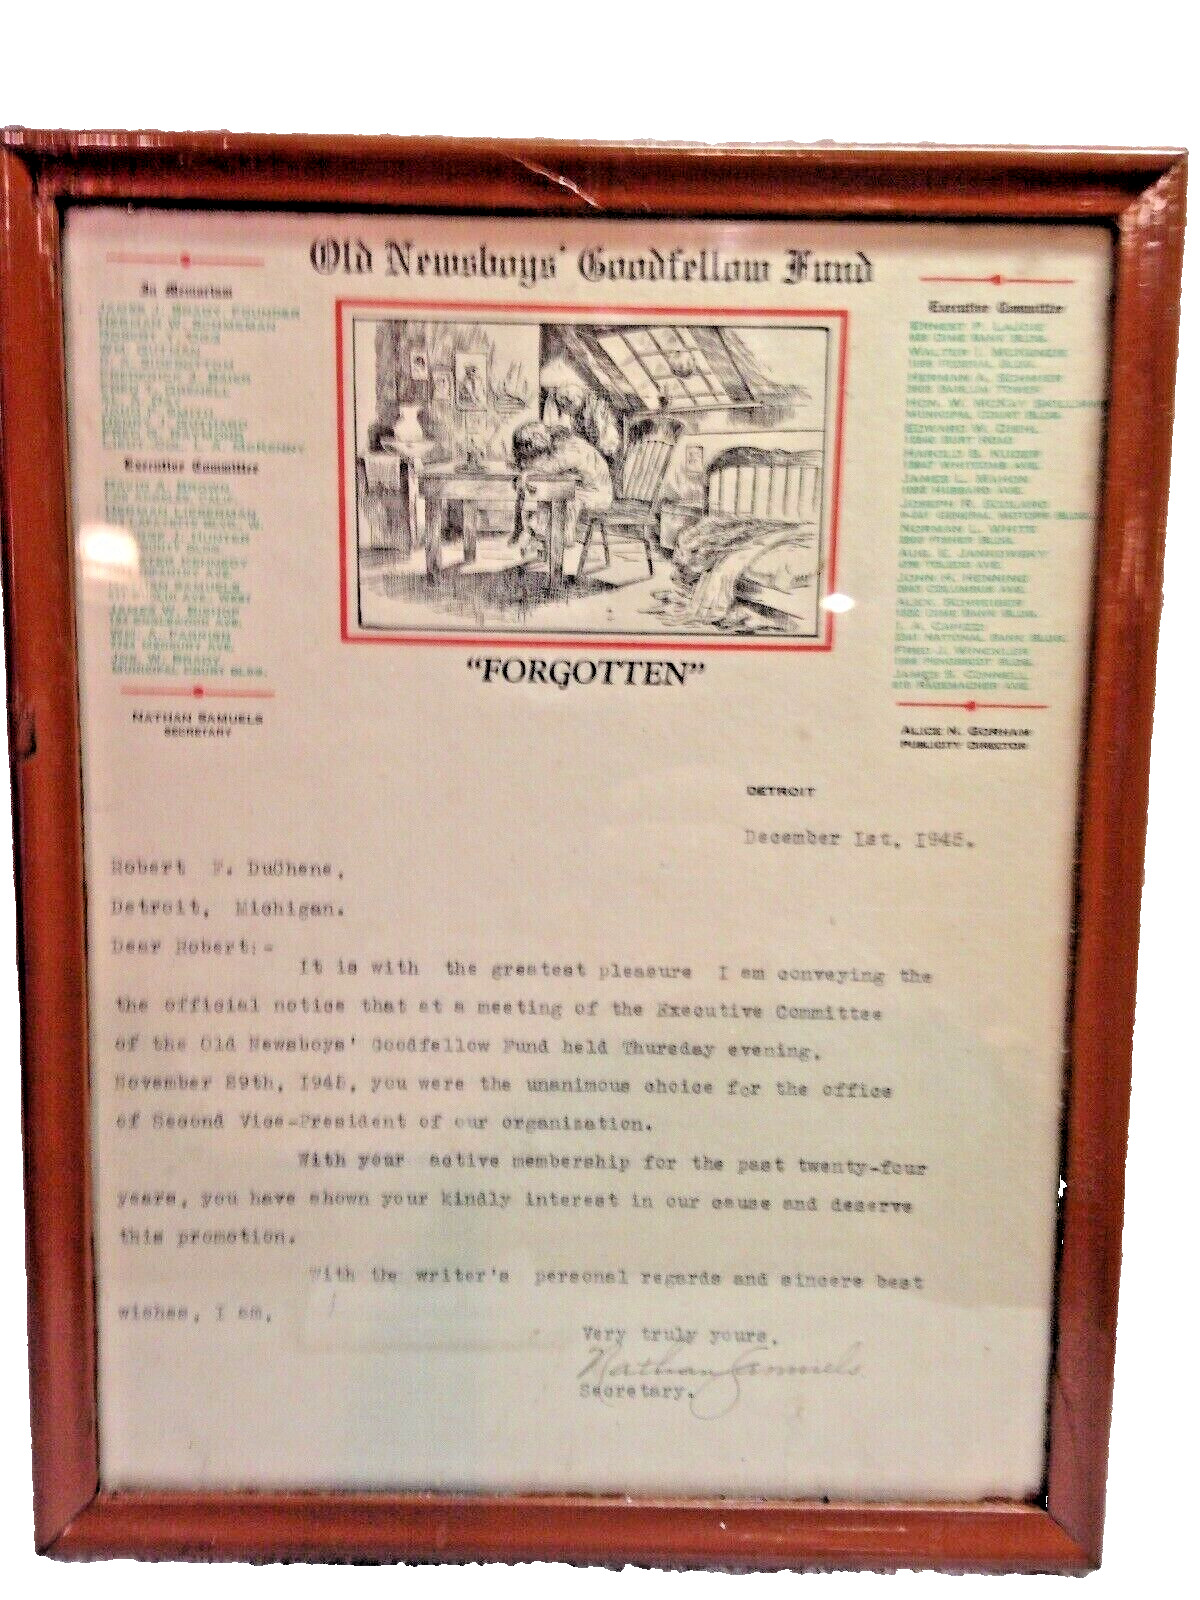 Old NewsBoys GoodFellow Fund Forgotten Letterhead 1945 Rare Framed 